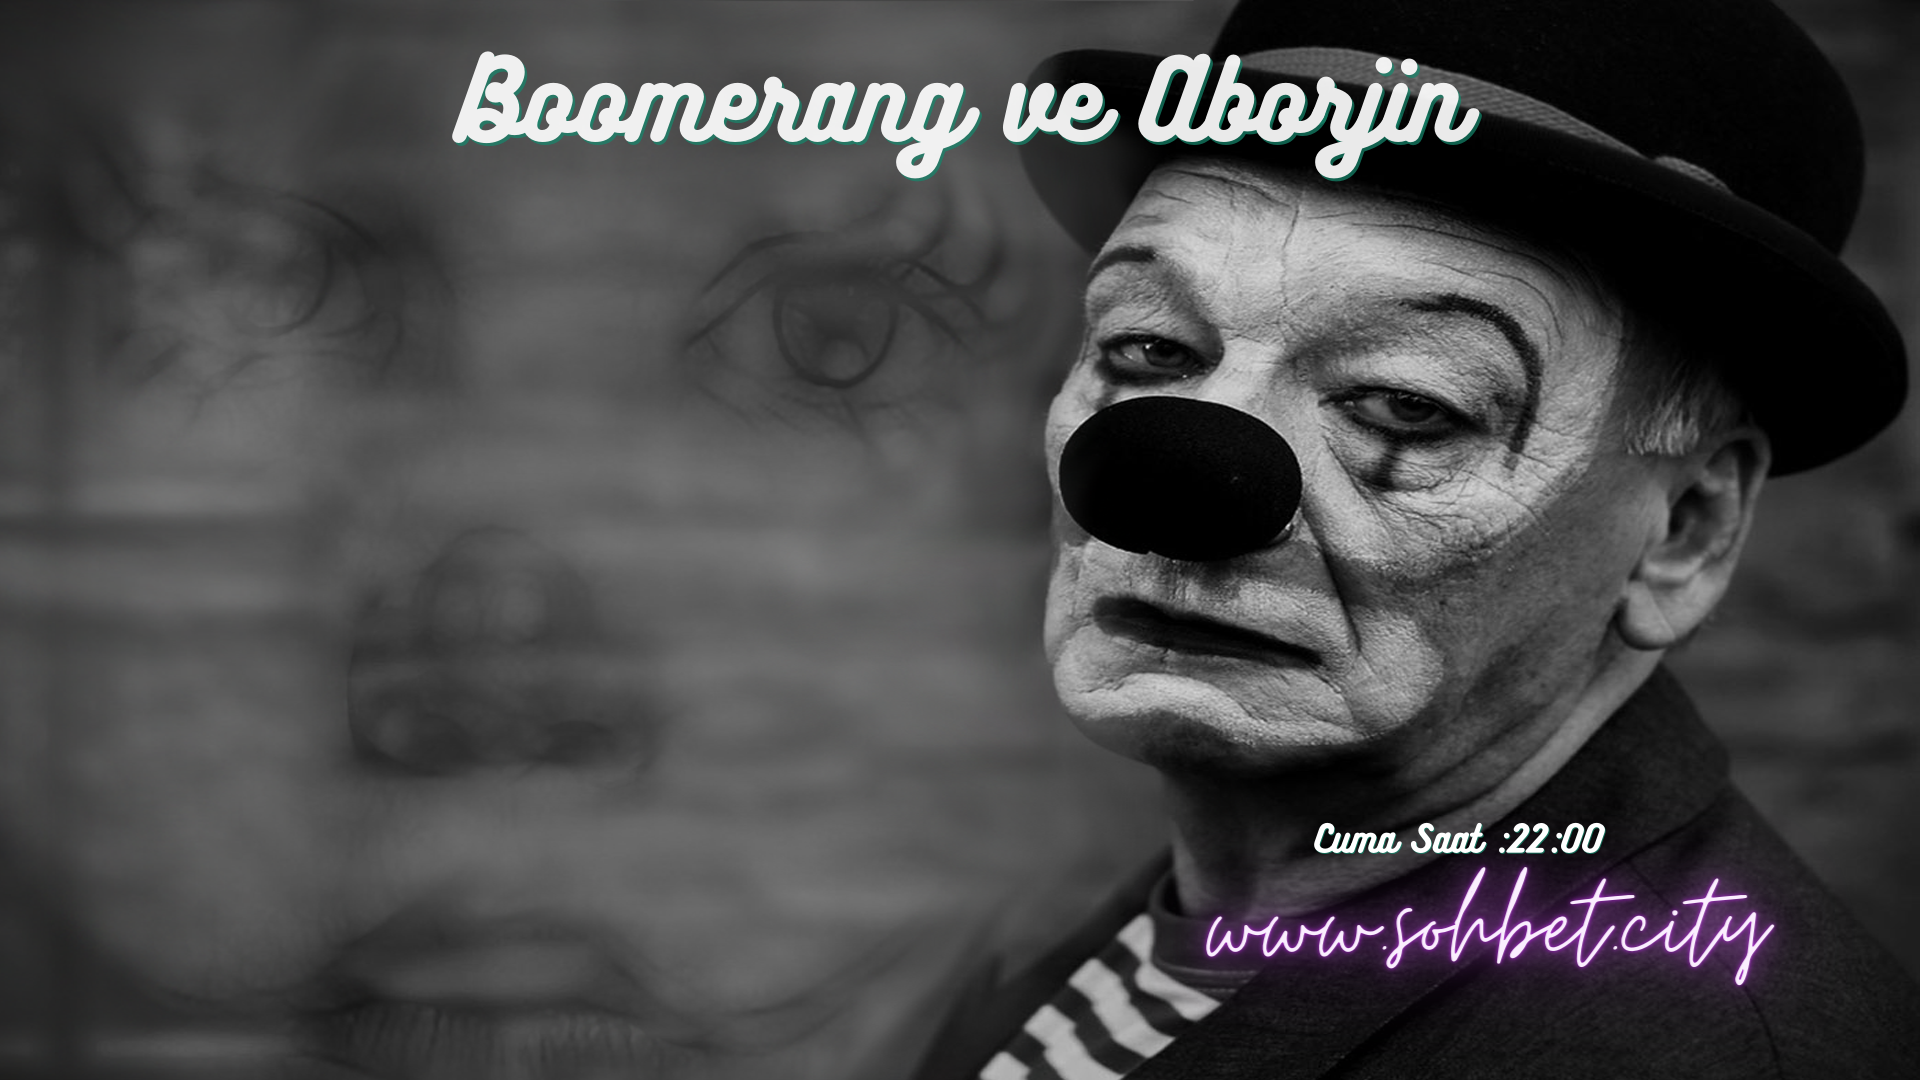 Boomerang ve Aborjin Show - Bu Akam 22:00'de Limonfm.ORG'da